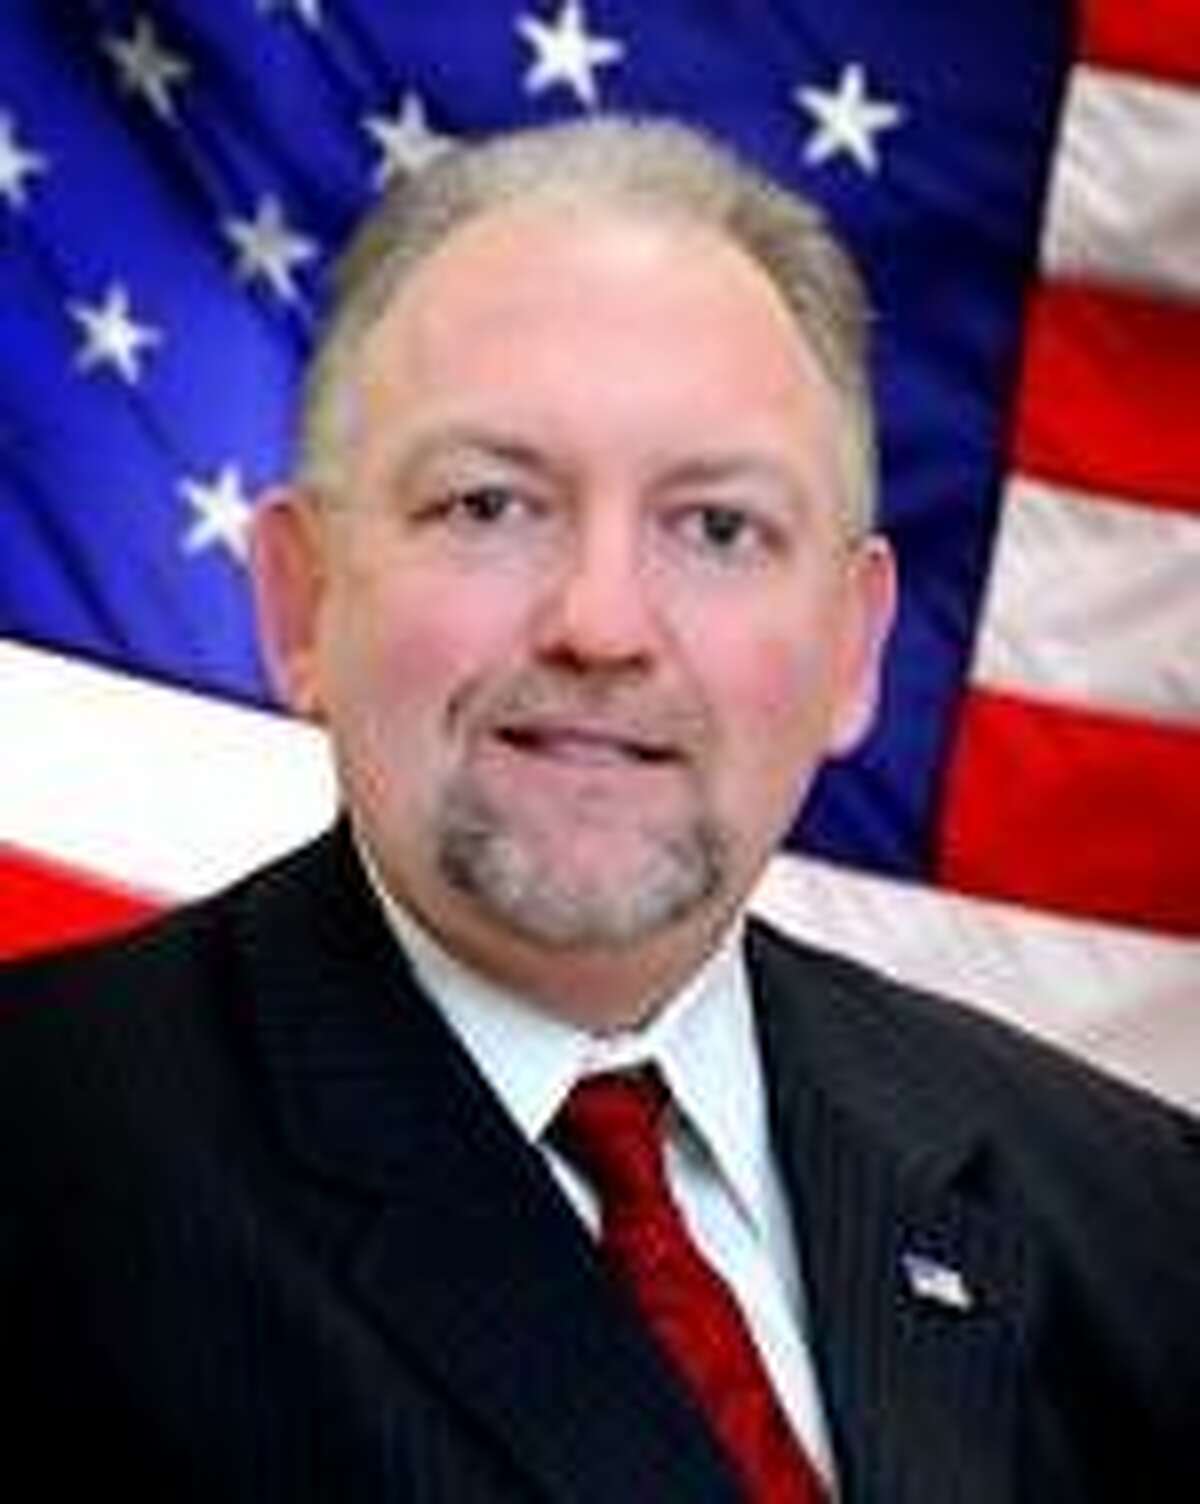 Kerrville City Councilman Gene Allen announced he would resign on Jan. 26.